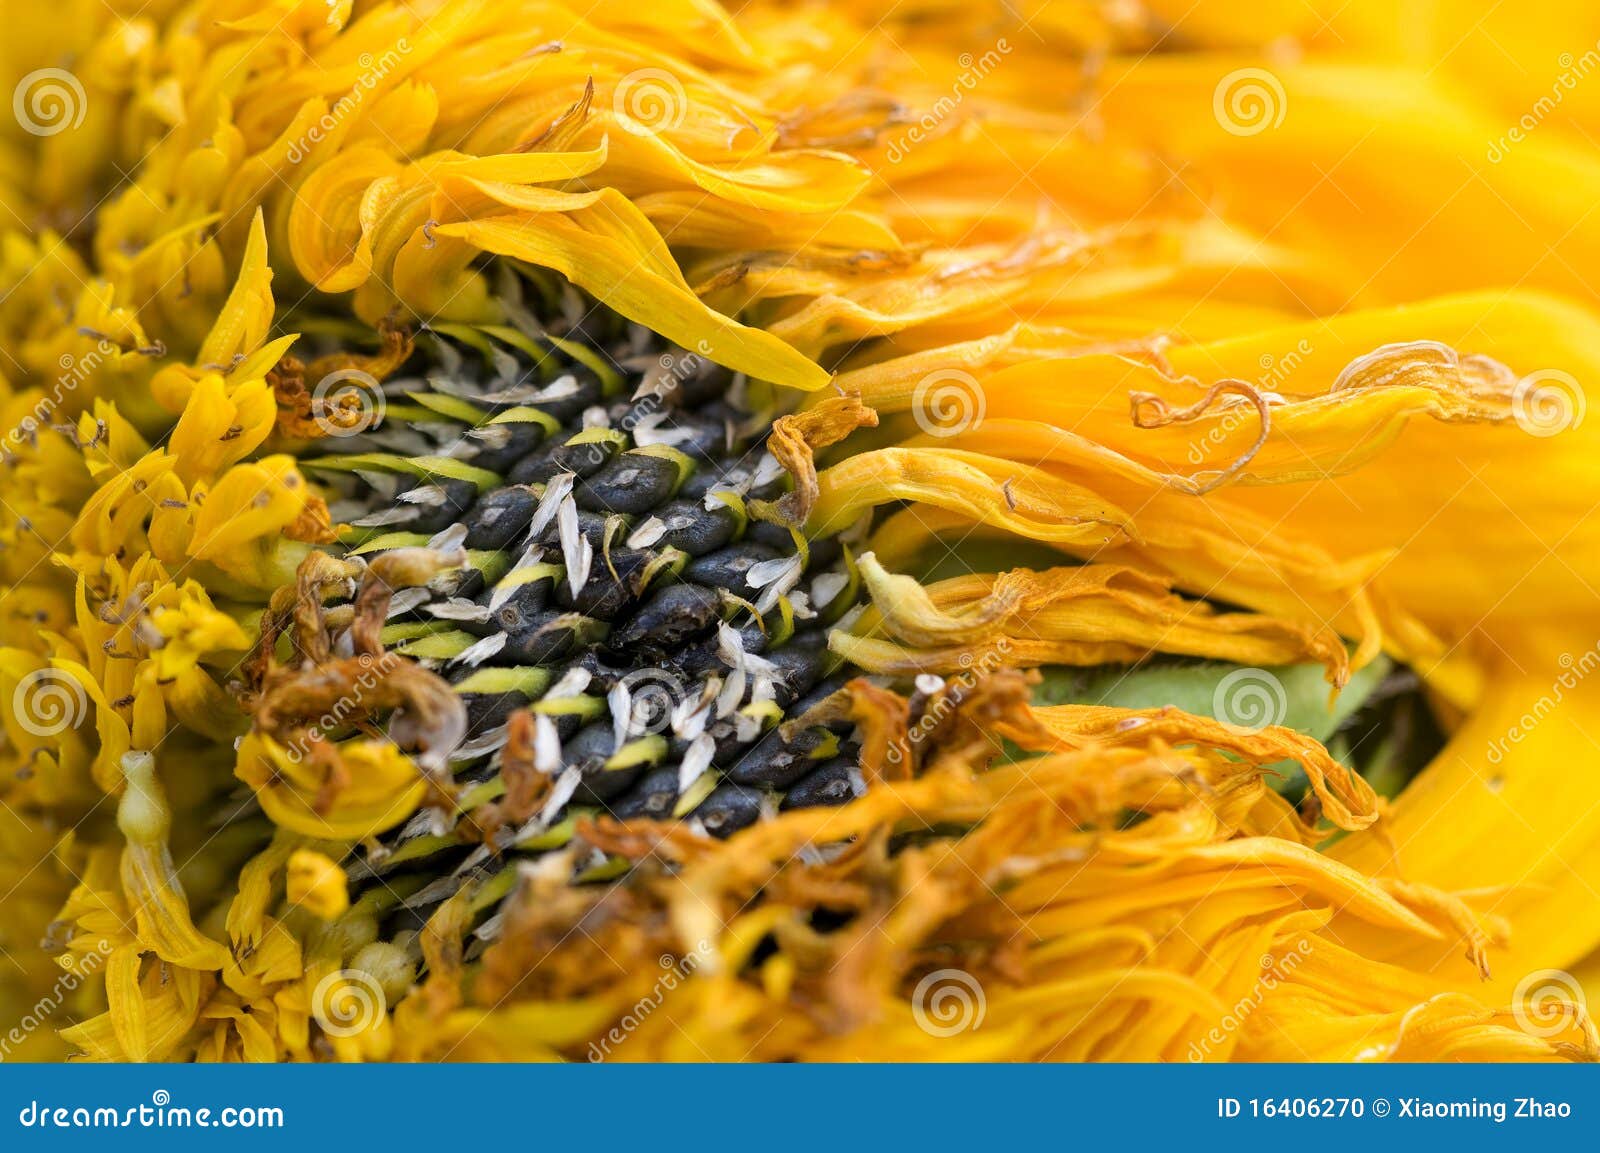 wilted sunflower petals